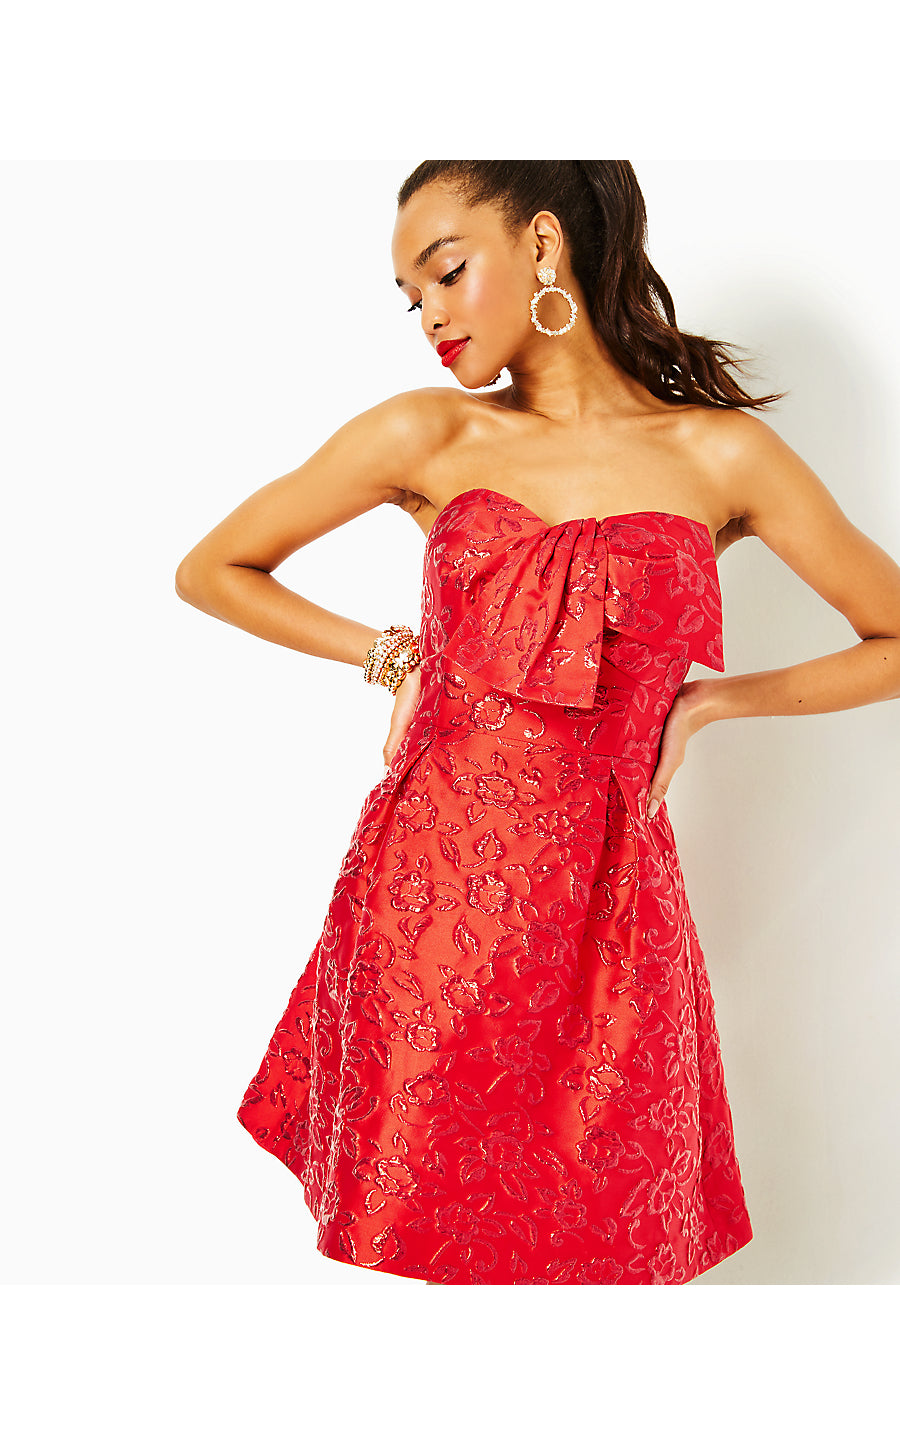 KATALEYA DRESS - AMARYLLIS RED FLORAL BROCADE